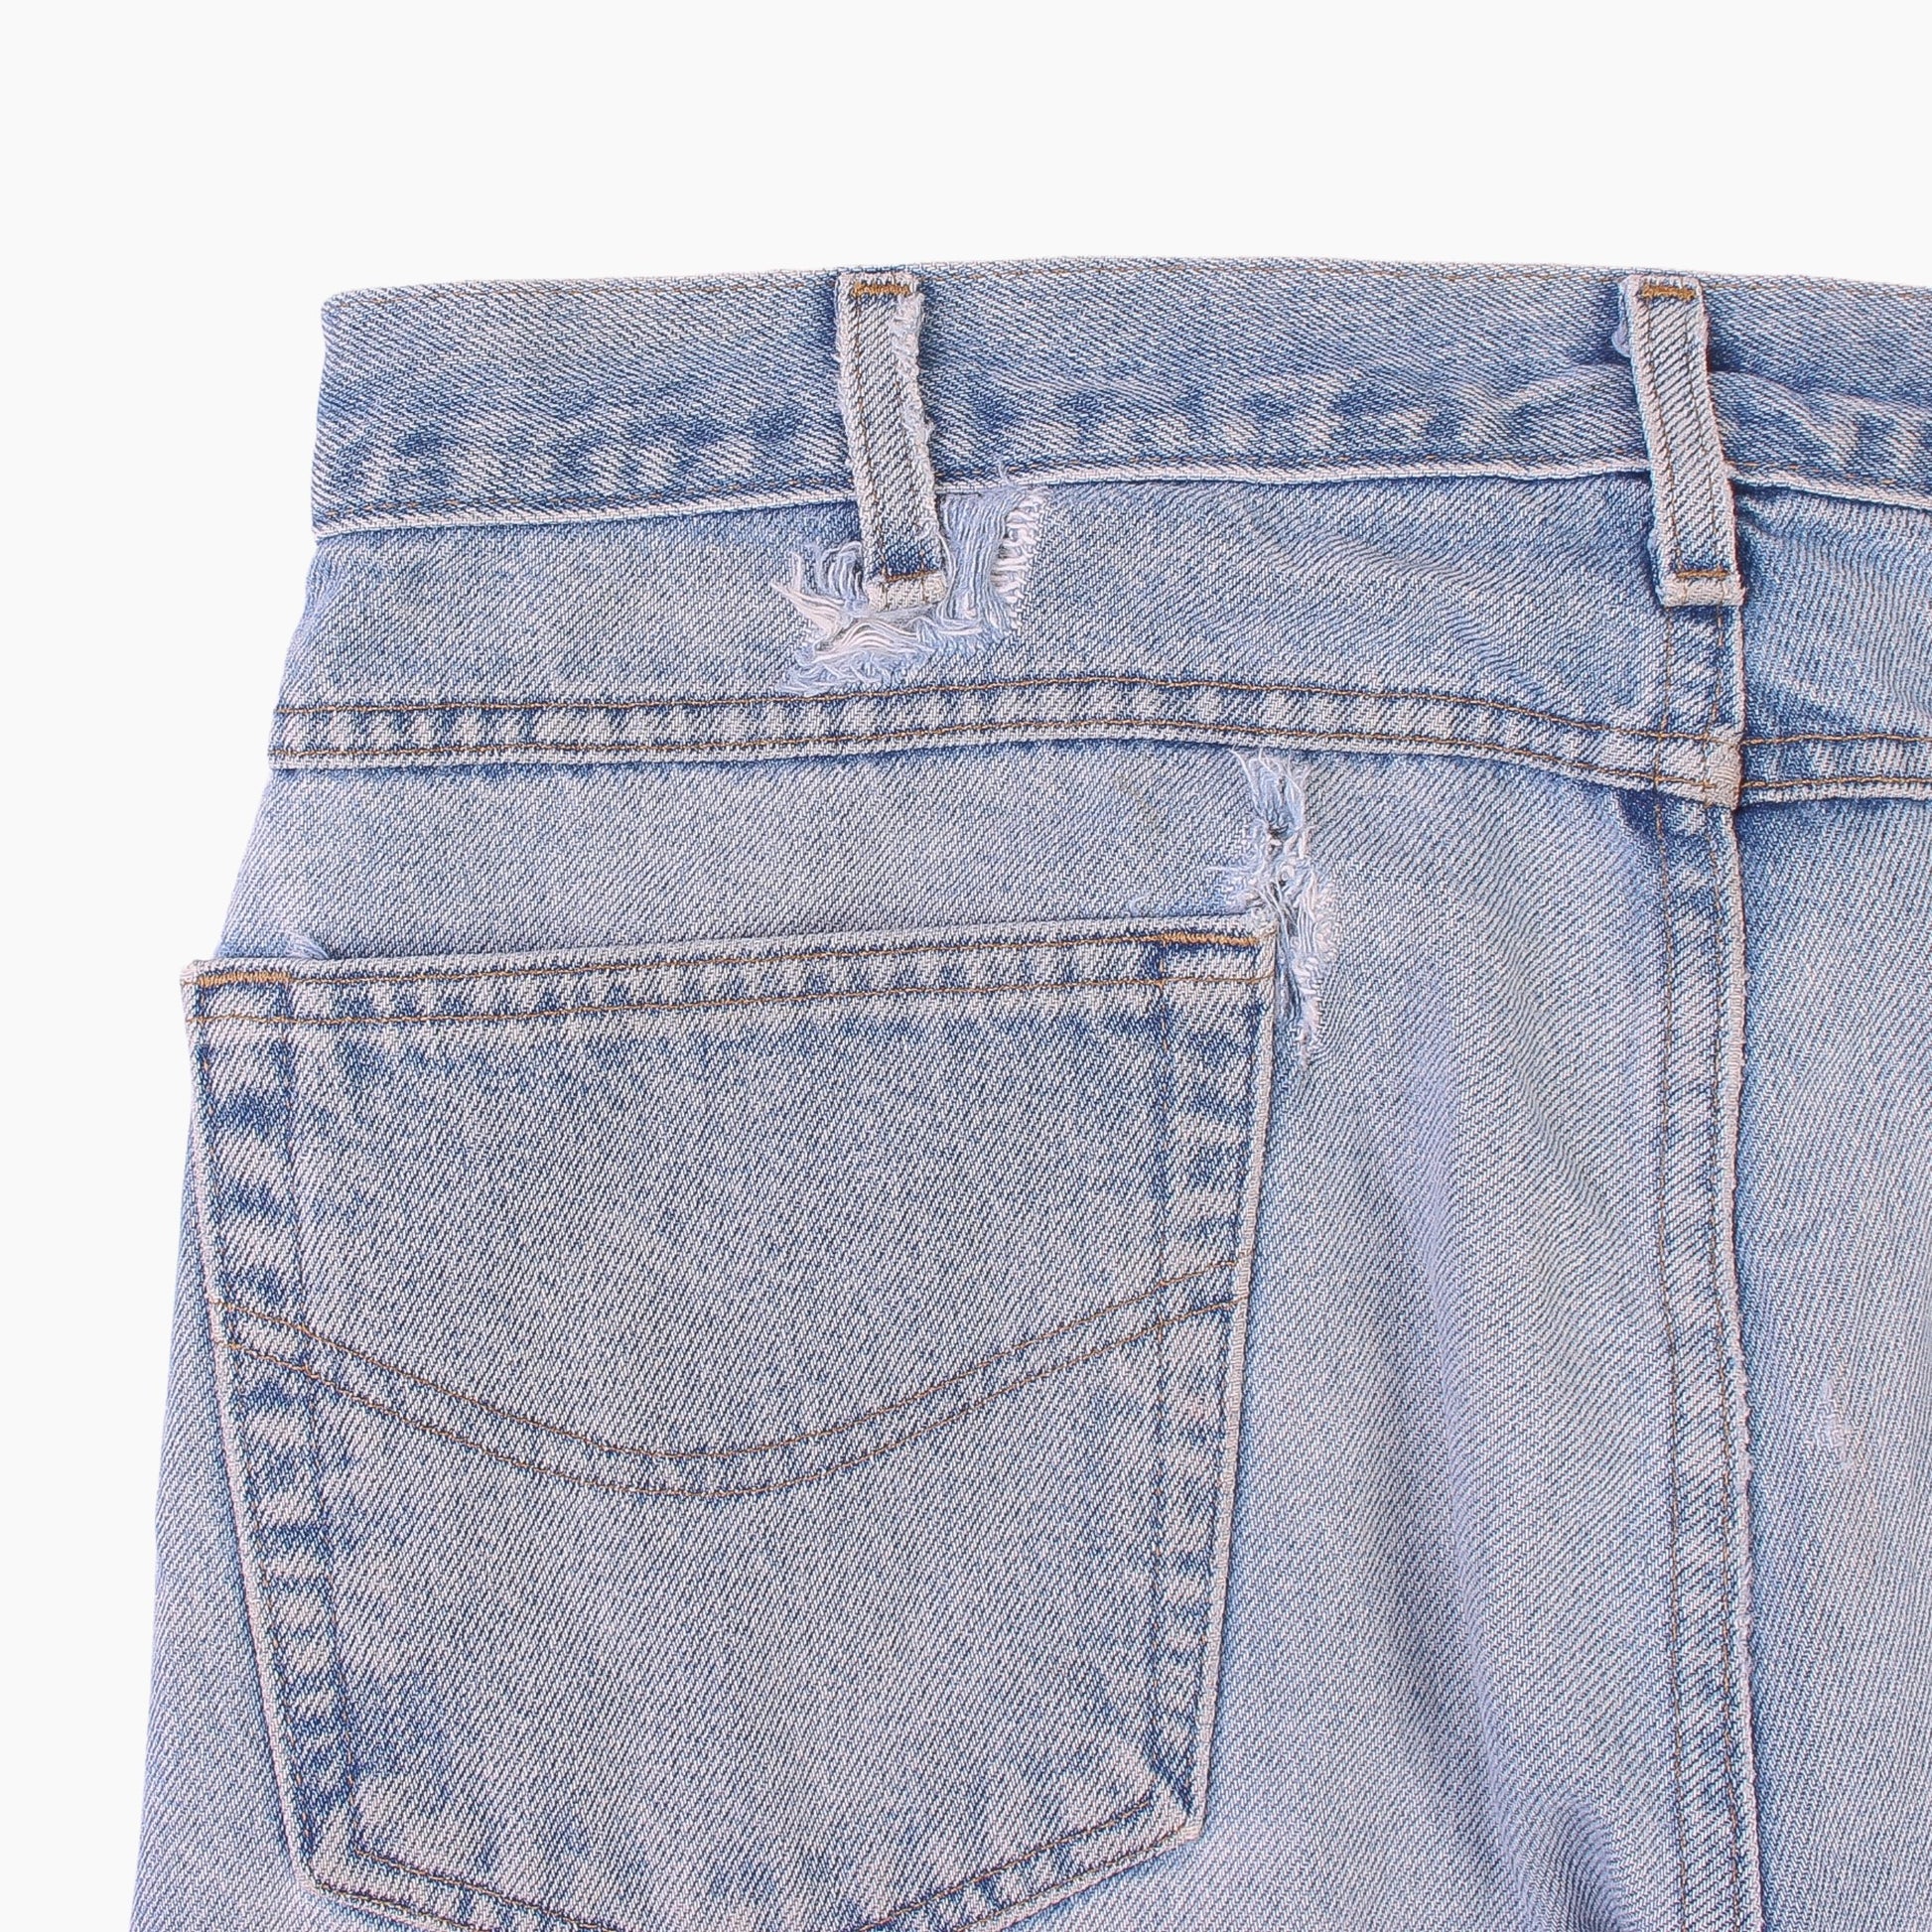 Vintage Pants - Denim - 38/30 - American Madness